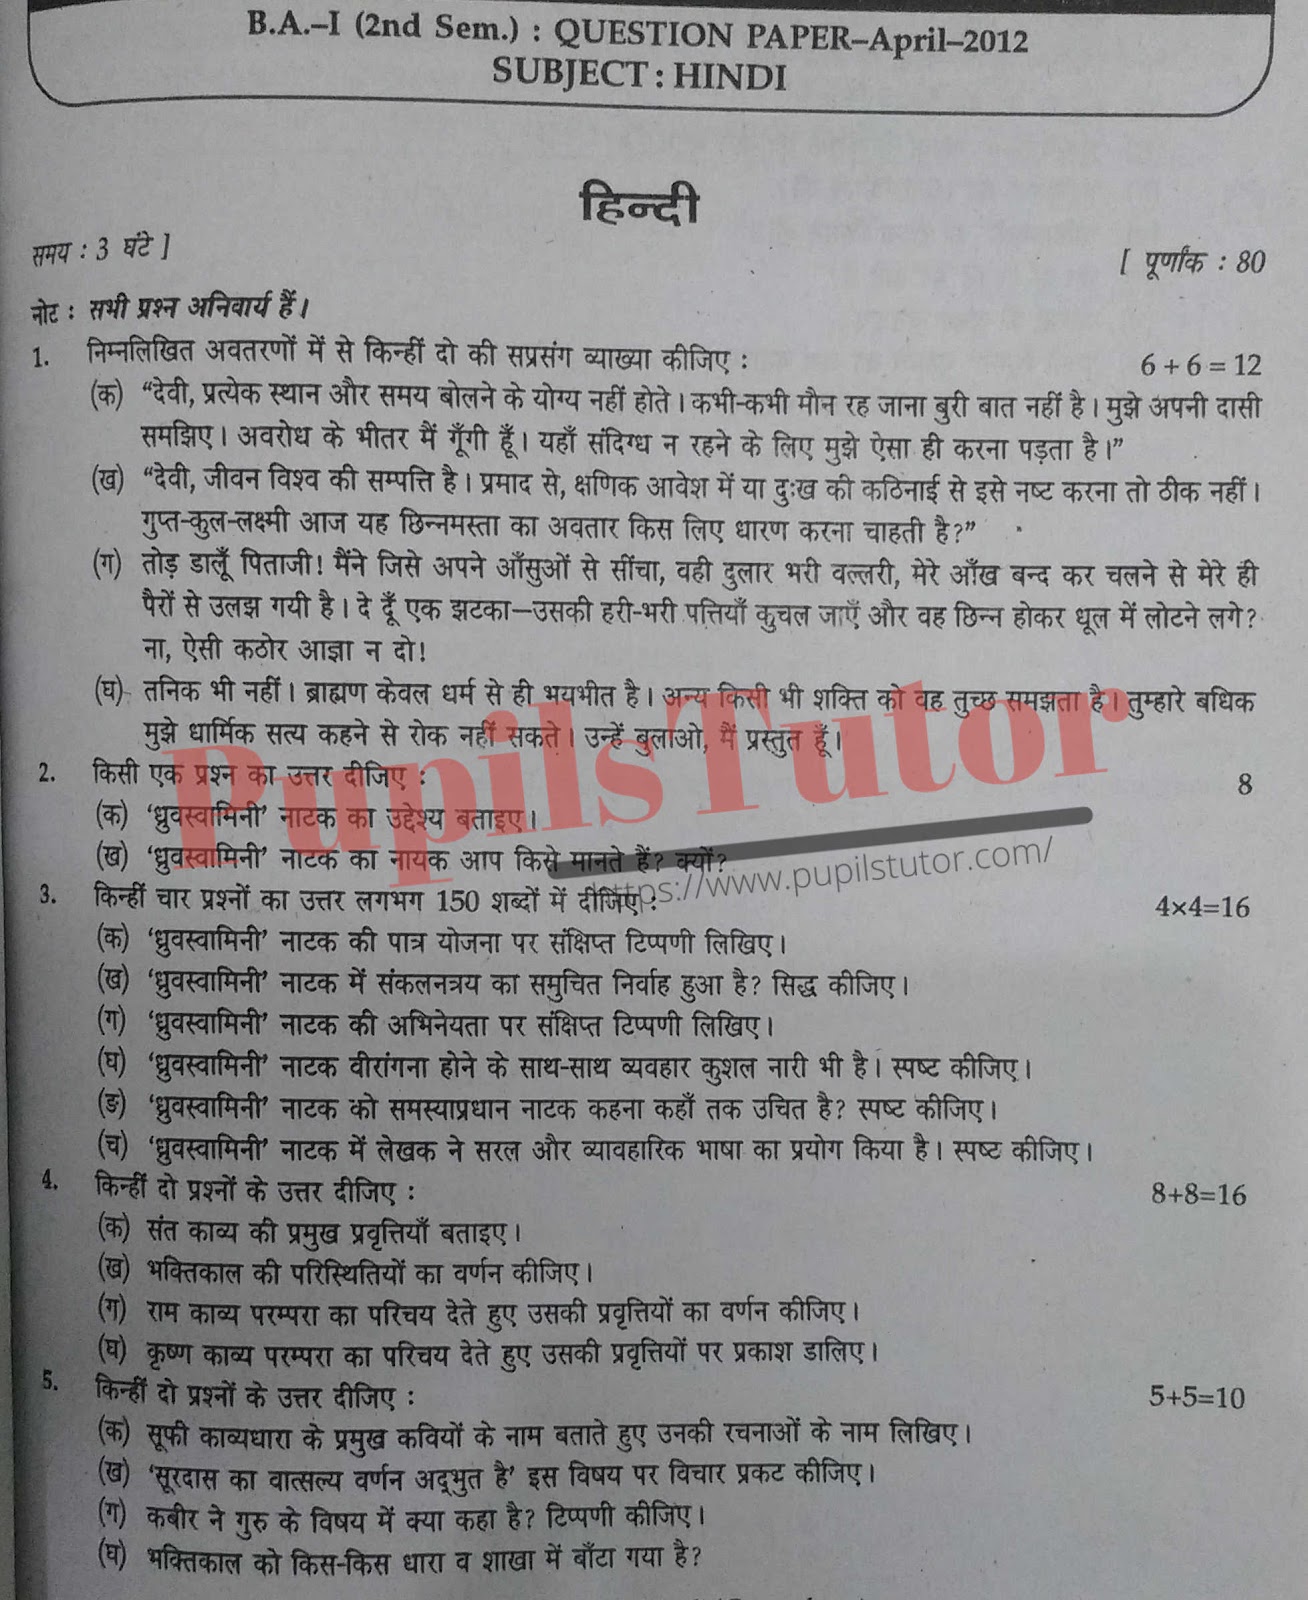 KUK (Kurukshetra University, Kurukshetra Haryana) BA Semester Exam Second Semester Previous Year Hindi Question Paper For 2012 Exam (Question Paper Page 1) - pupilstutor.com